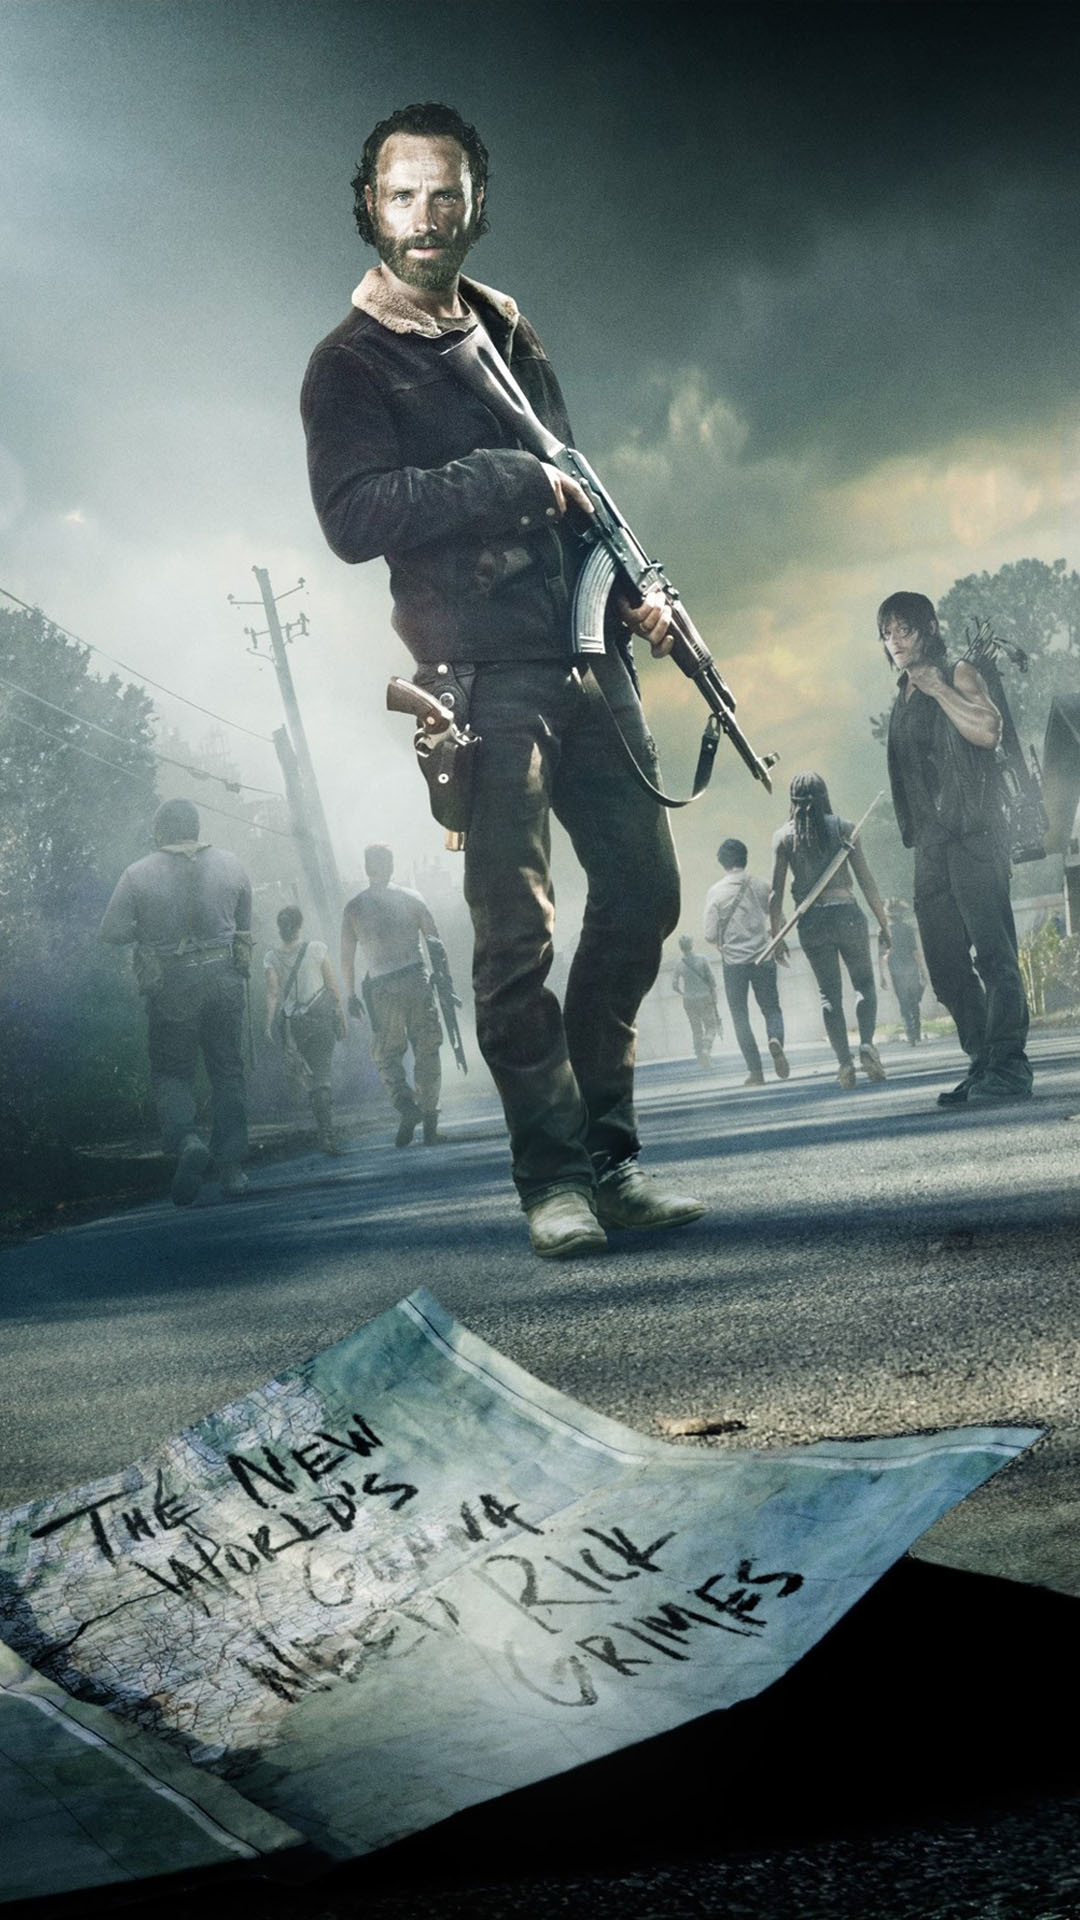 1080x1920 The Walking Dead iPhone Wallpaper - WallpaperSafari